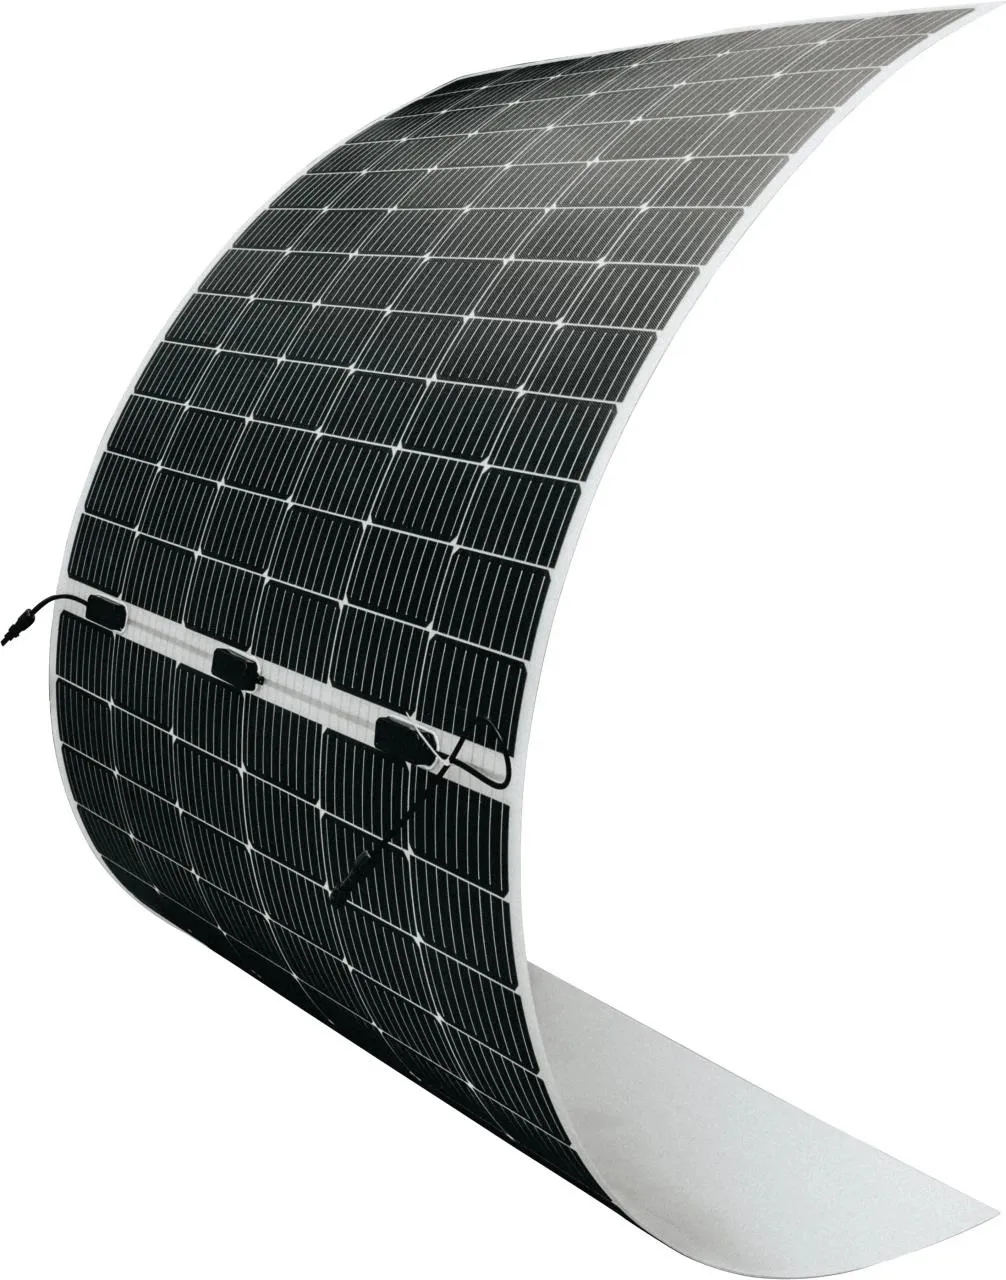 Chinesische Lieferanten Solarmodule Preis aus China 500w flexible Solarmodule niedrigster Preis Solarmodule